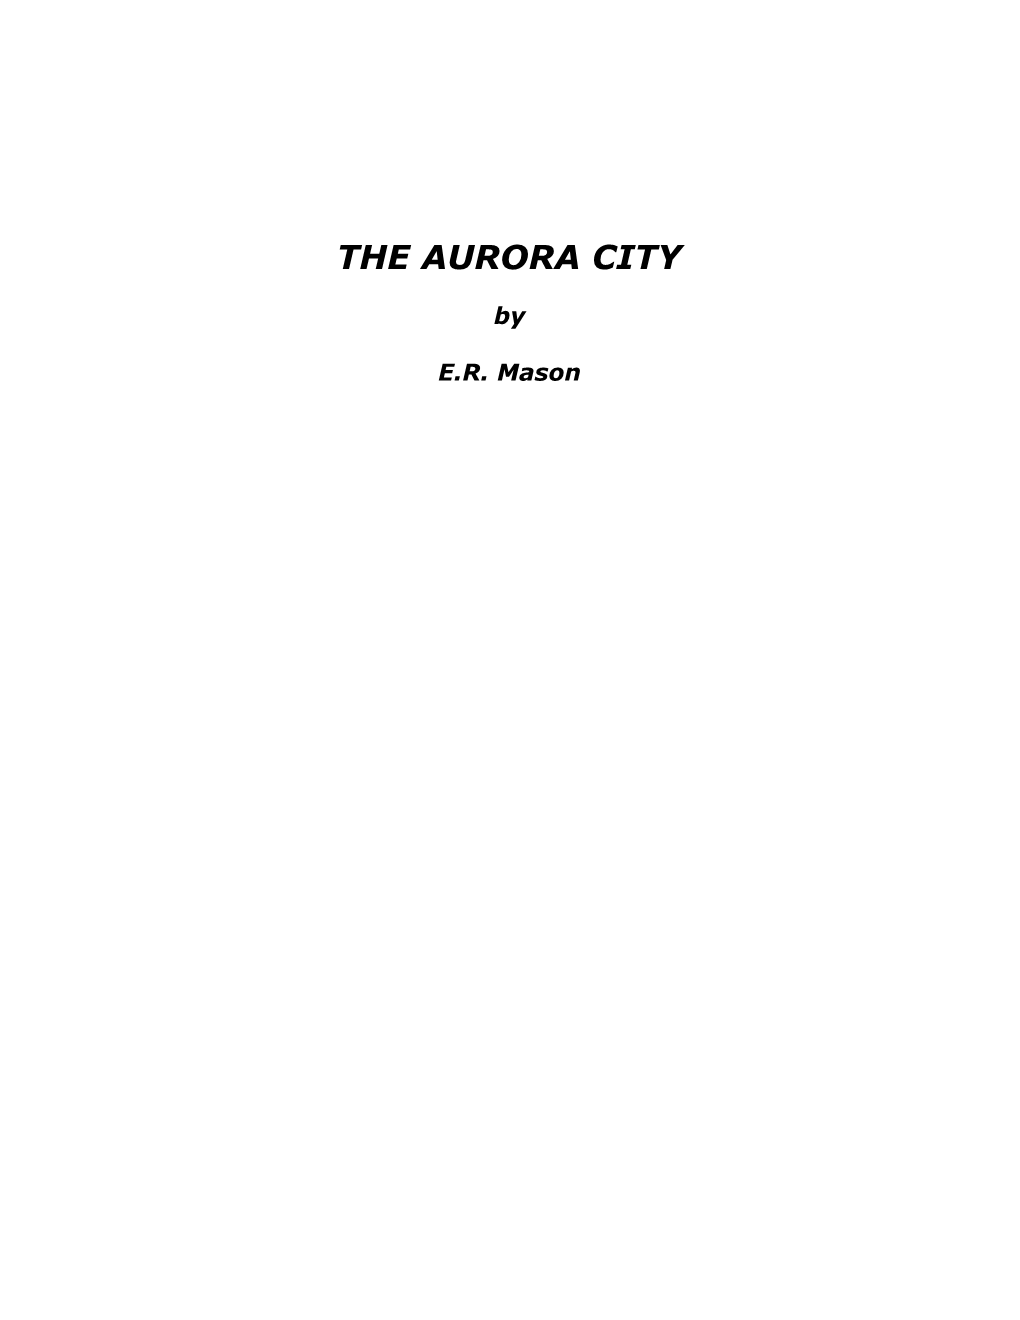 The Aurora City